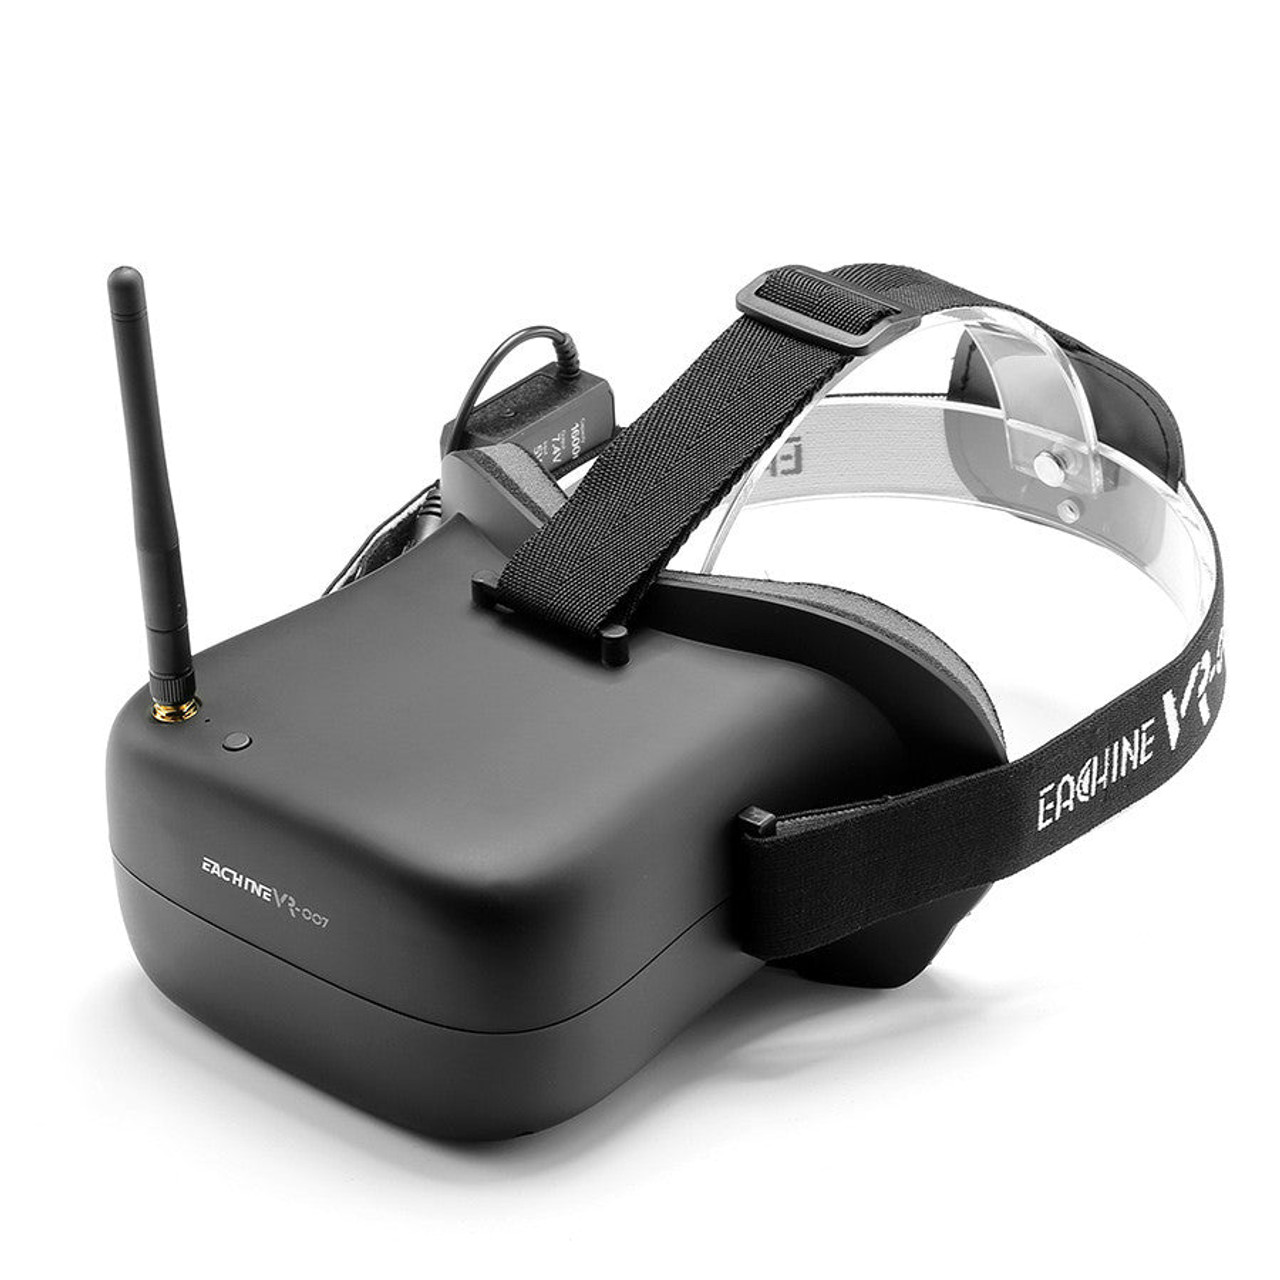 VR-007 VR007 5.8G 4.3 Inch HD FPV Goggles